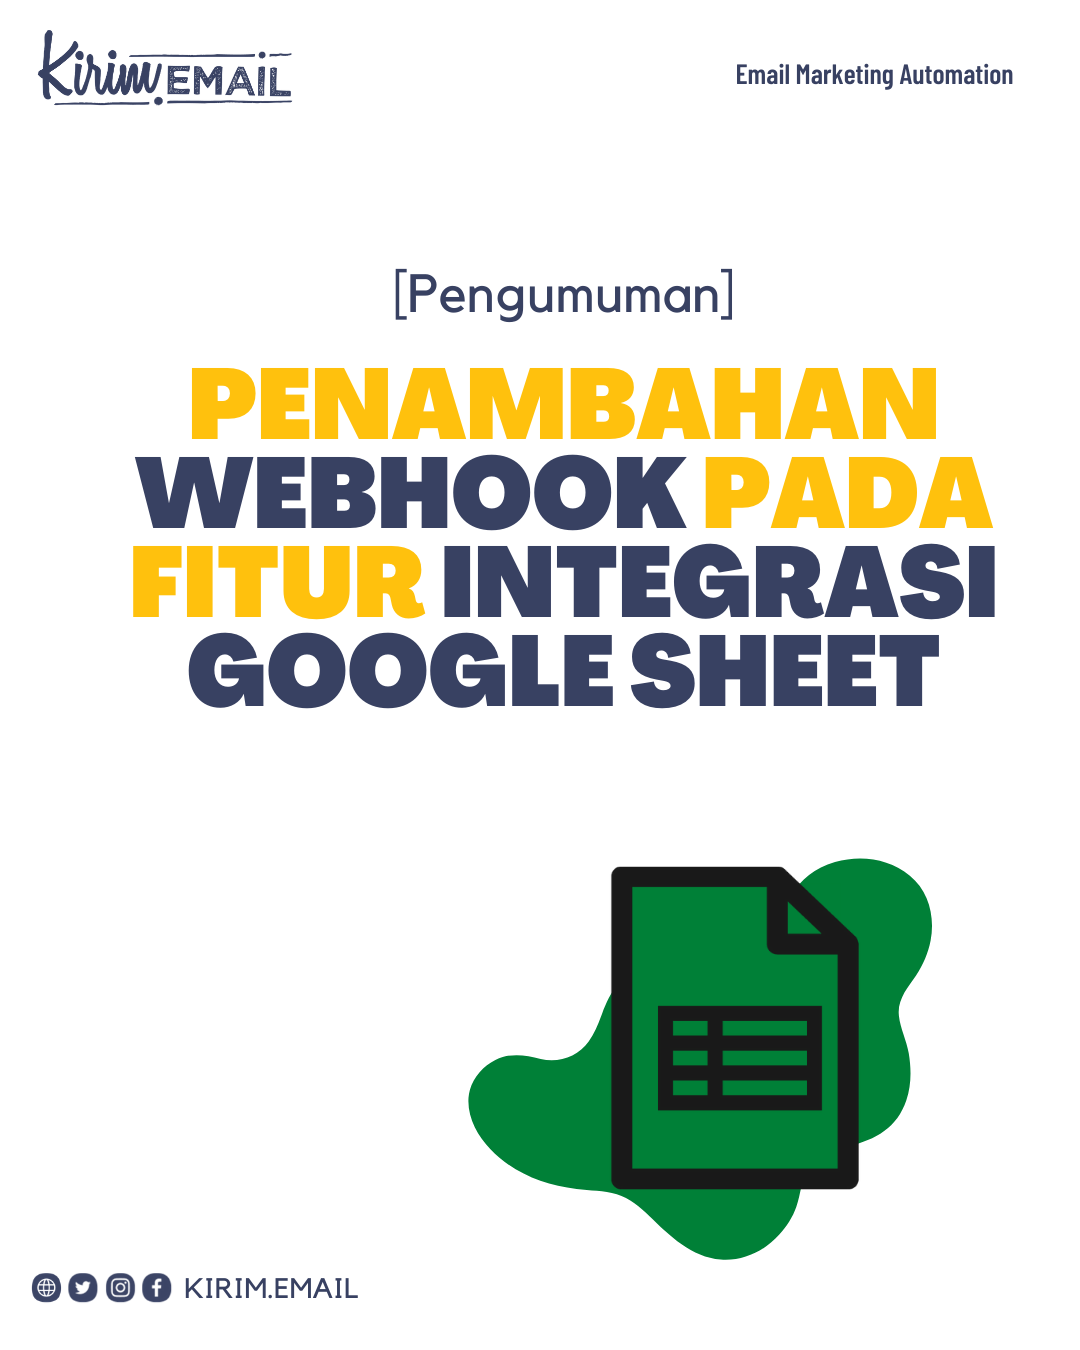 Penambahan Webhook Pada Fitur Integrasi Google Sheet